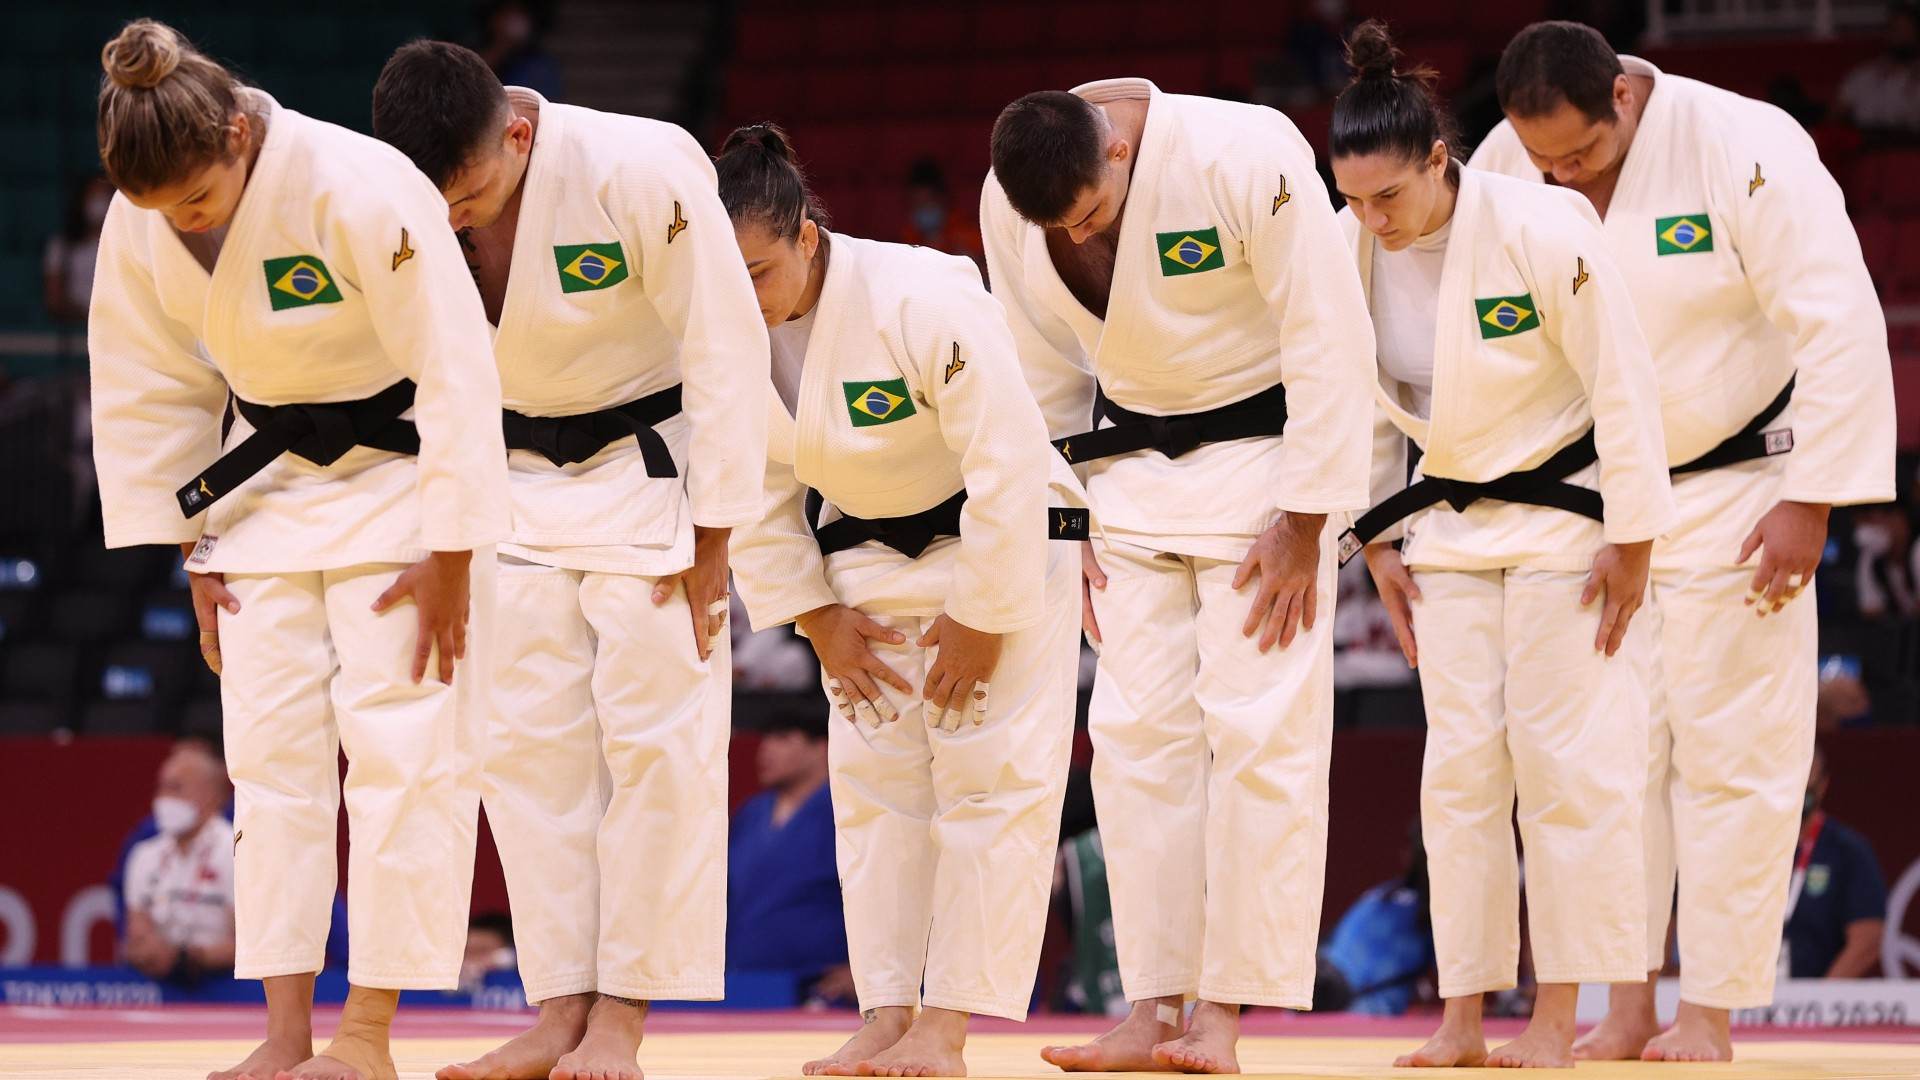 Equipe brasileira na disputa do judô nas Olimpíadas